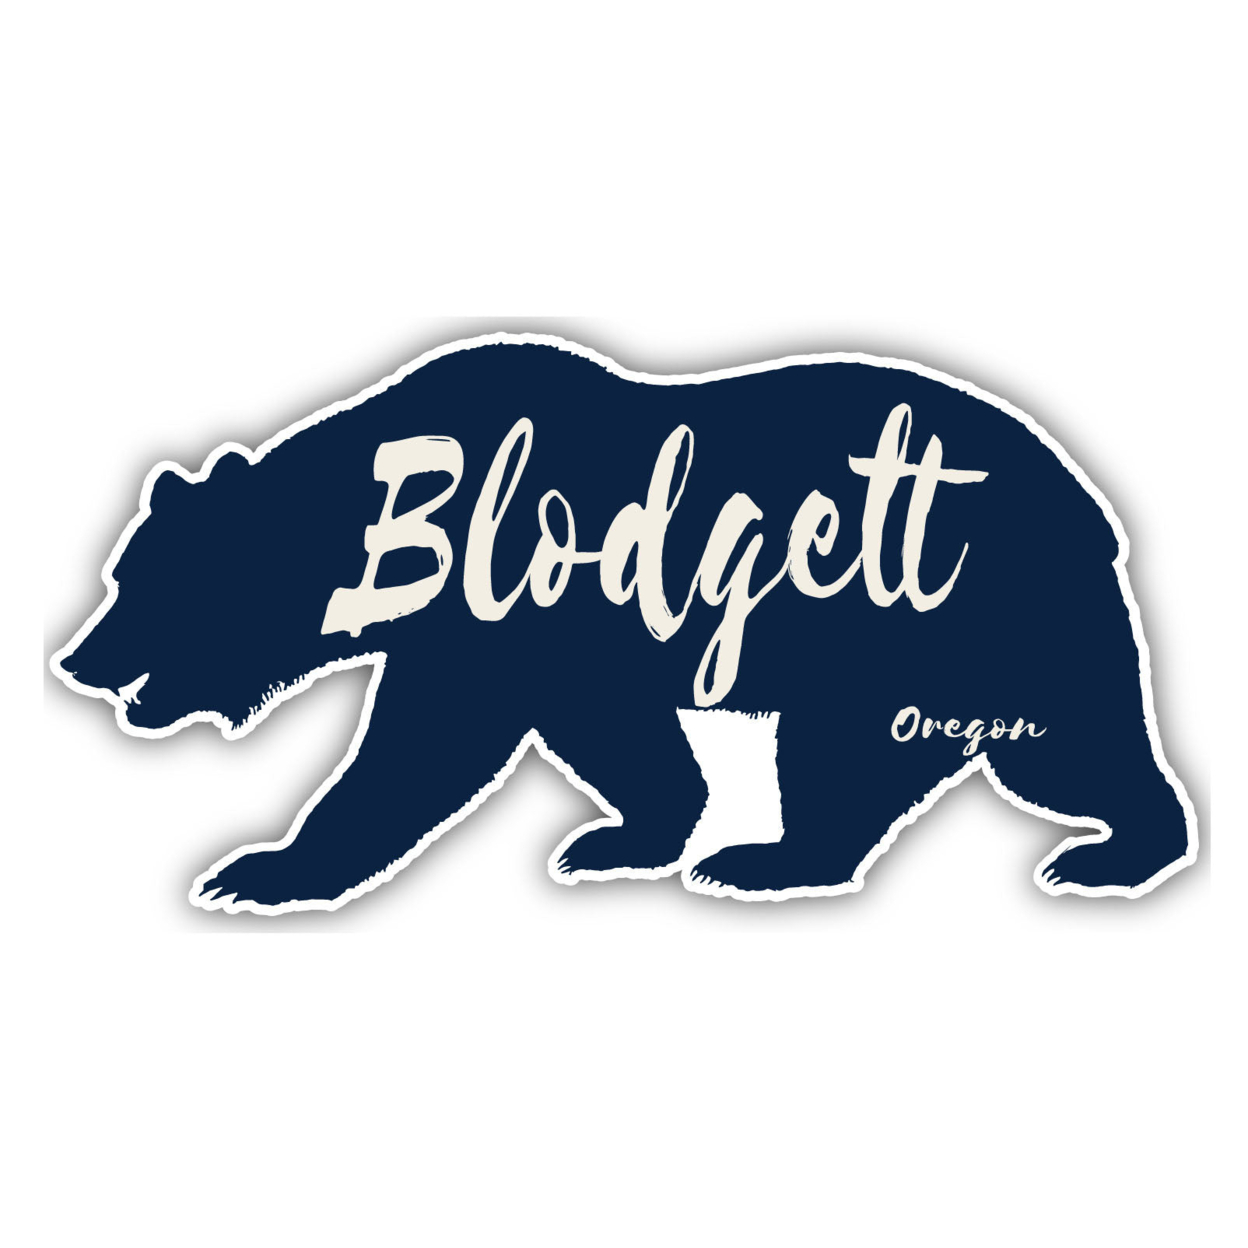 Blodgett Oregon Souvenir Decorative Stickers (Choose Theme And Size) - 4-Pack, 12-Inch, Bear